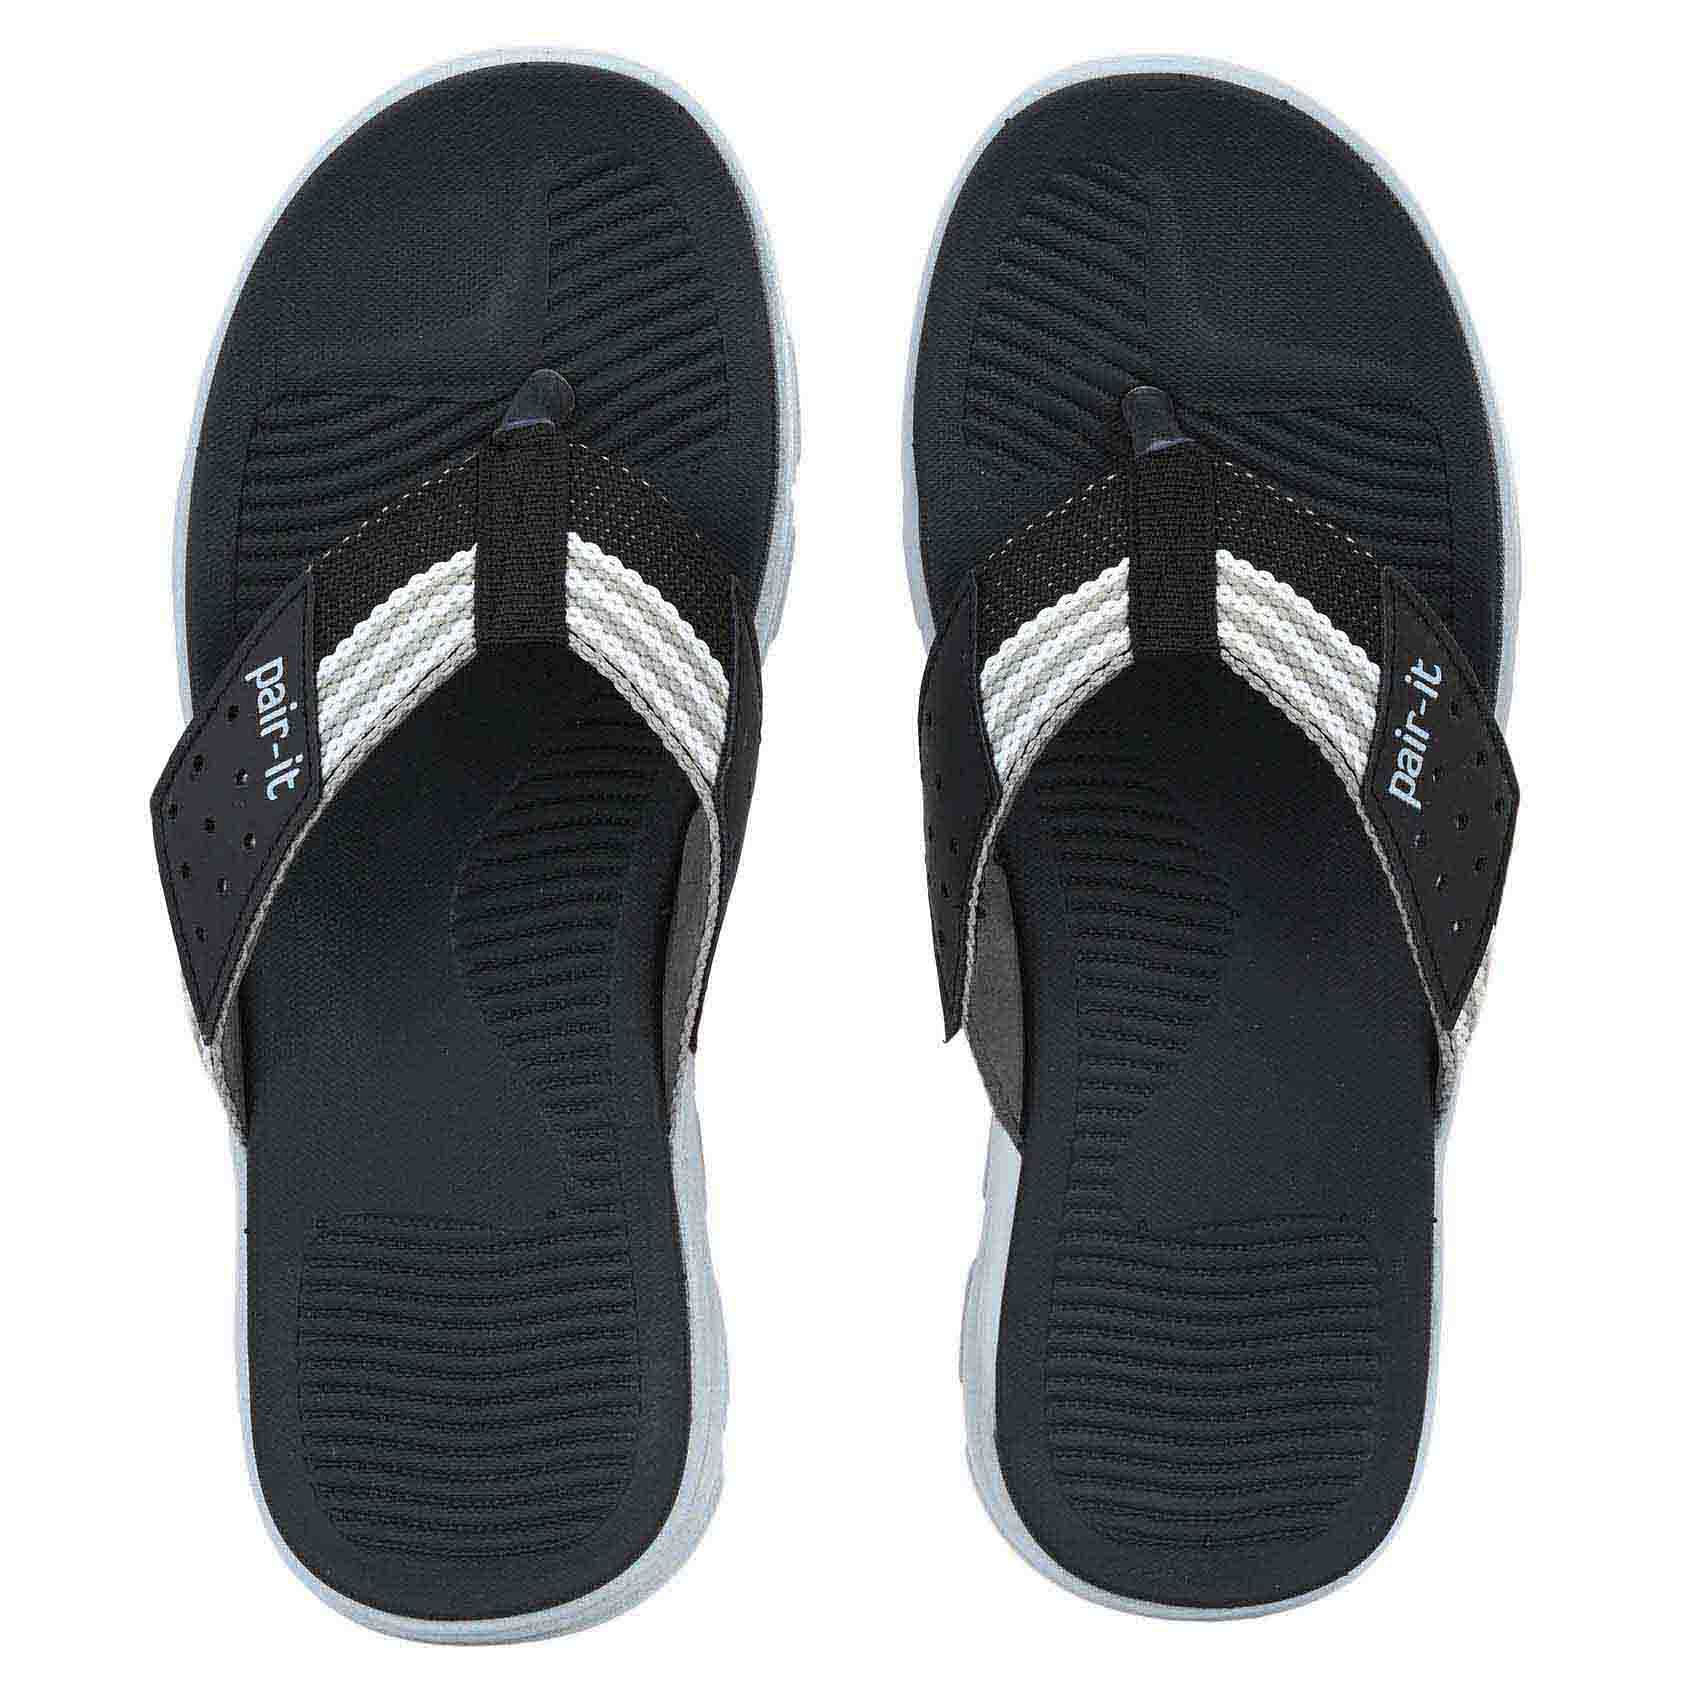 Pair-it Men's Rubberised EVA Slippers-LZ-Slippers119-Black/Grey